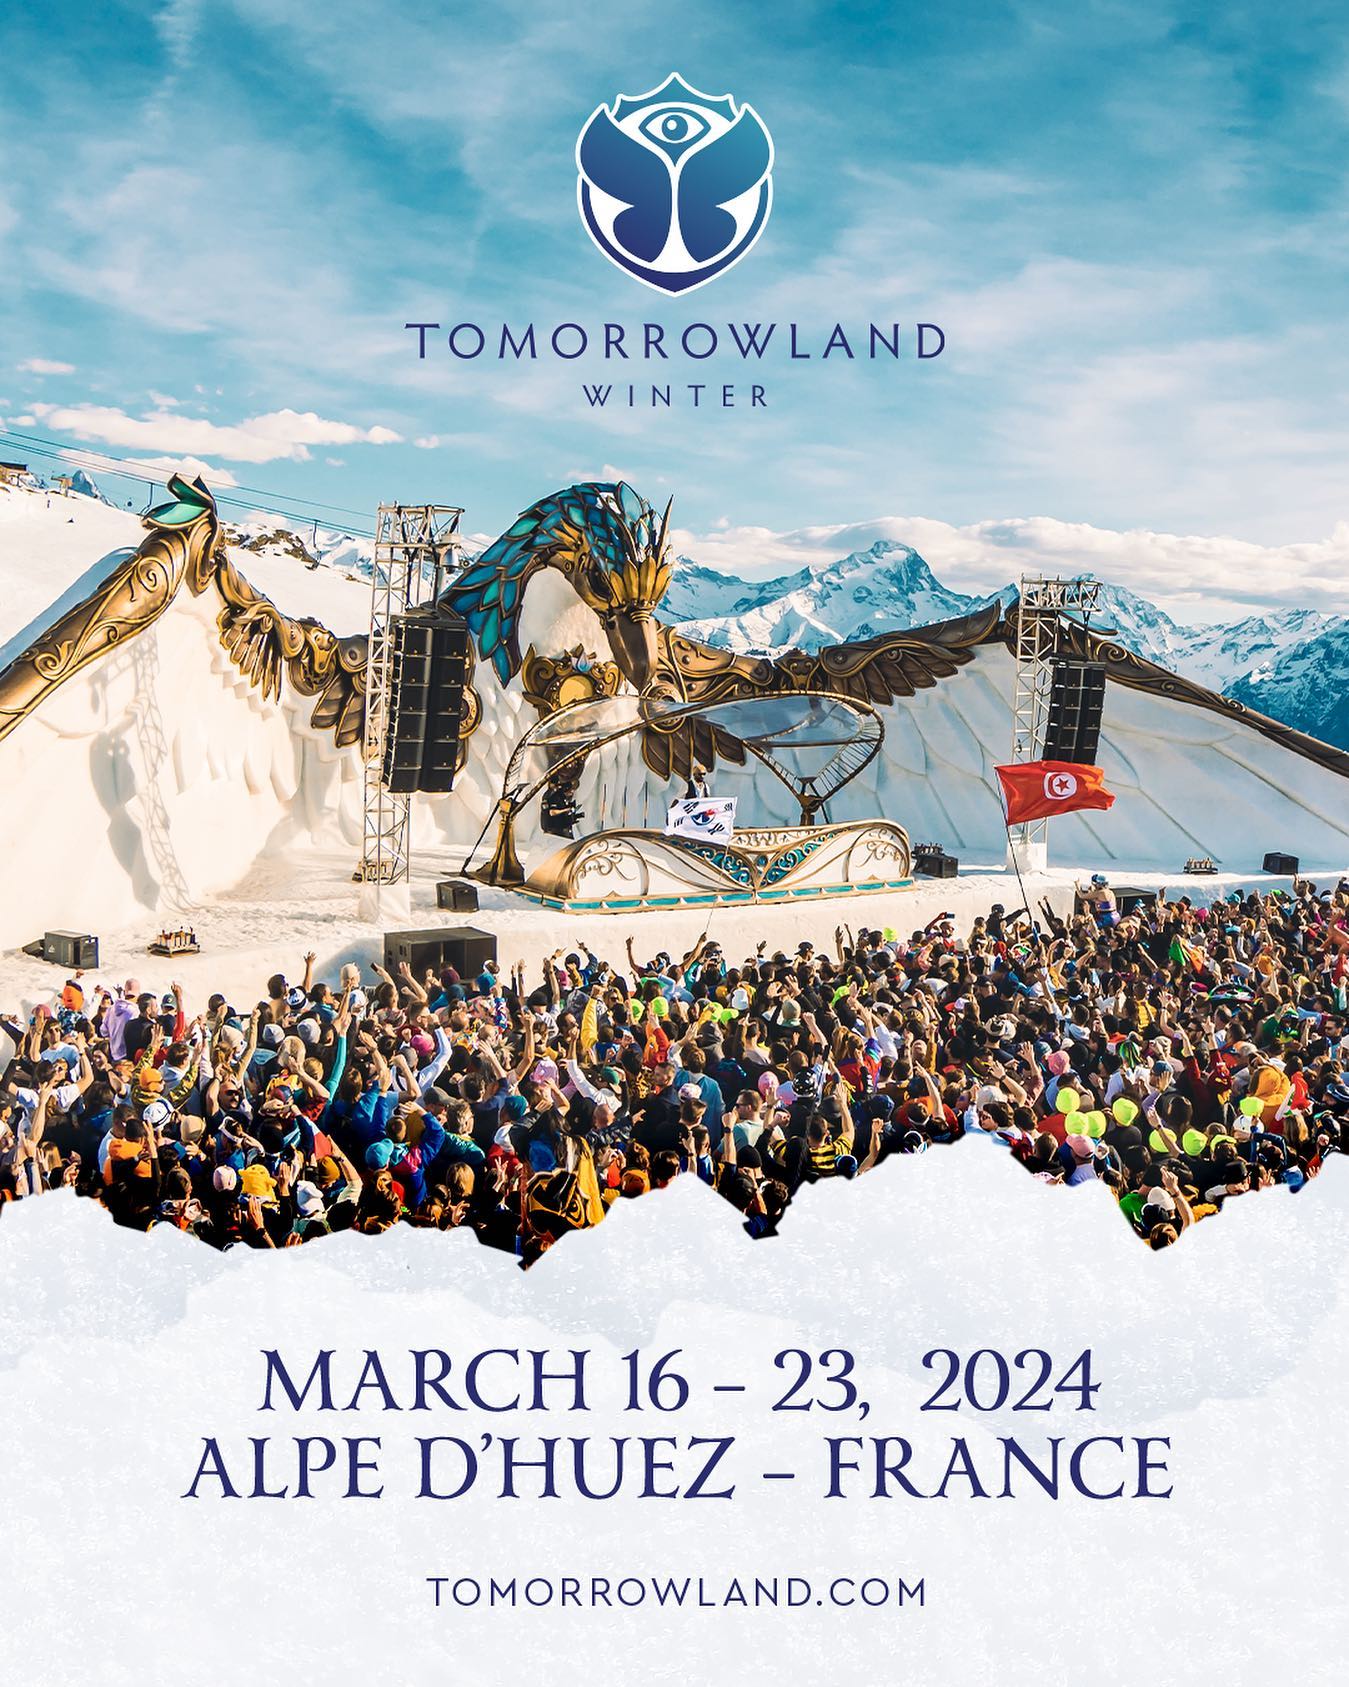 Tomorrowland Winter 2024日期已公布 DJMag.cn